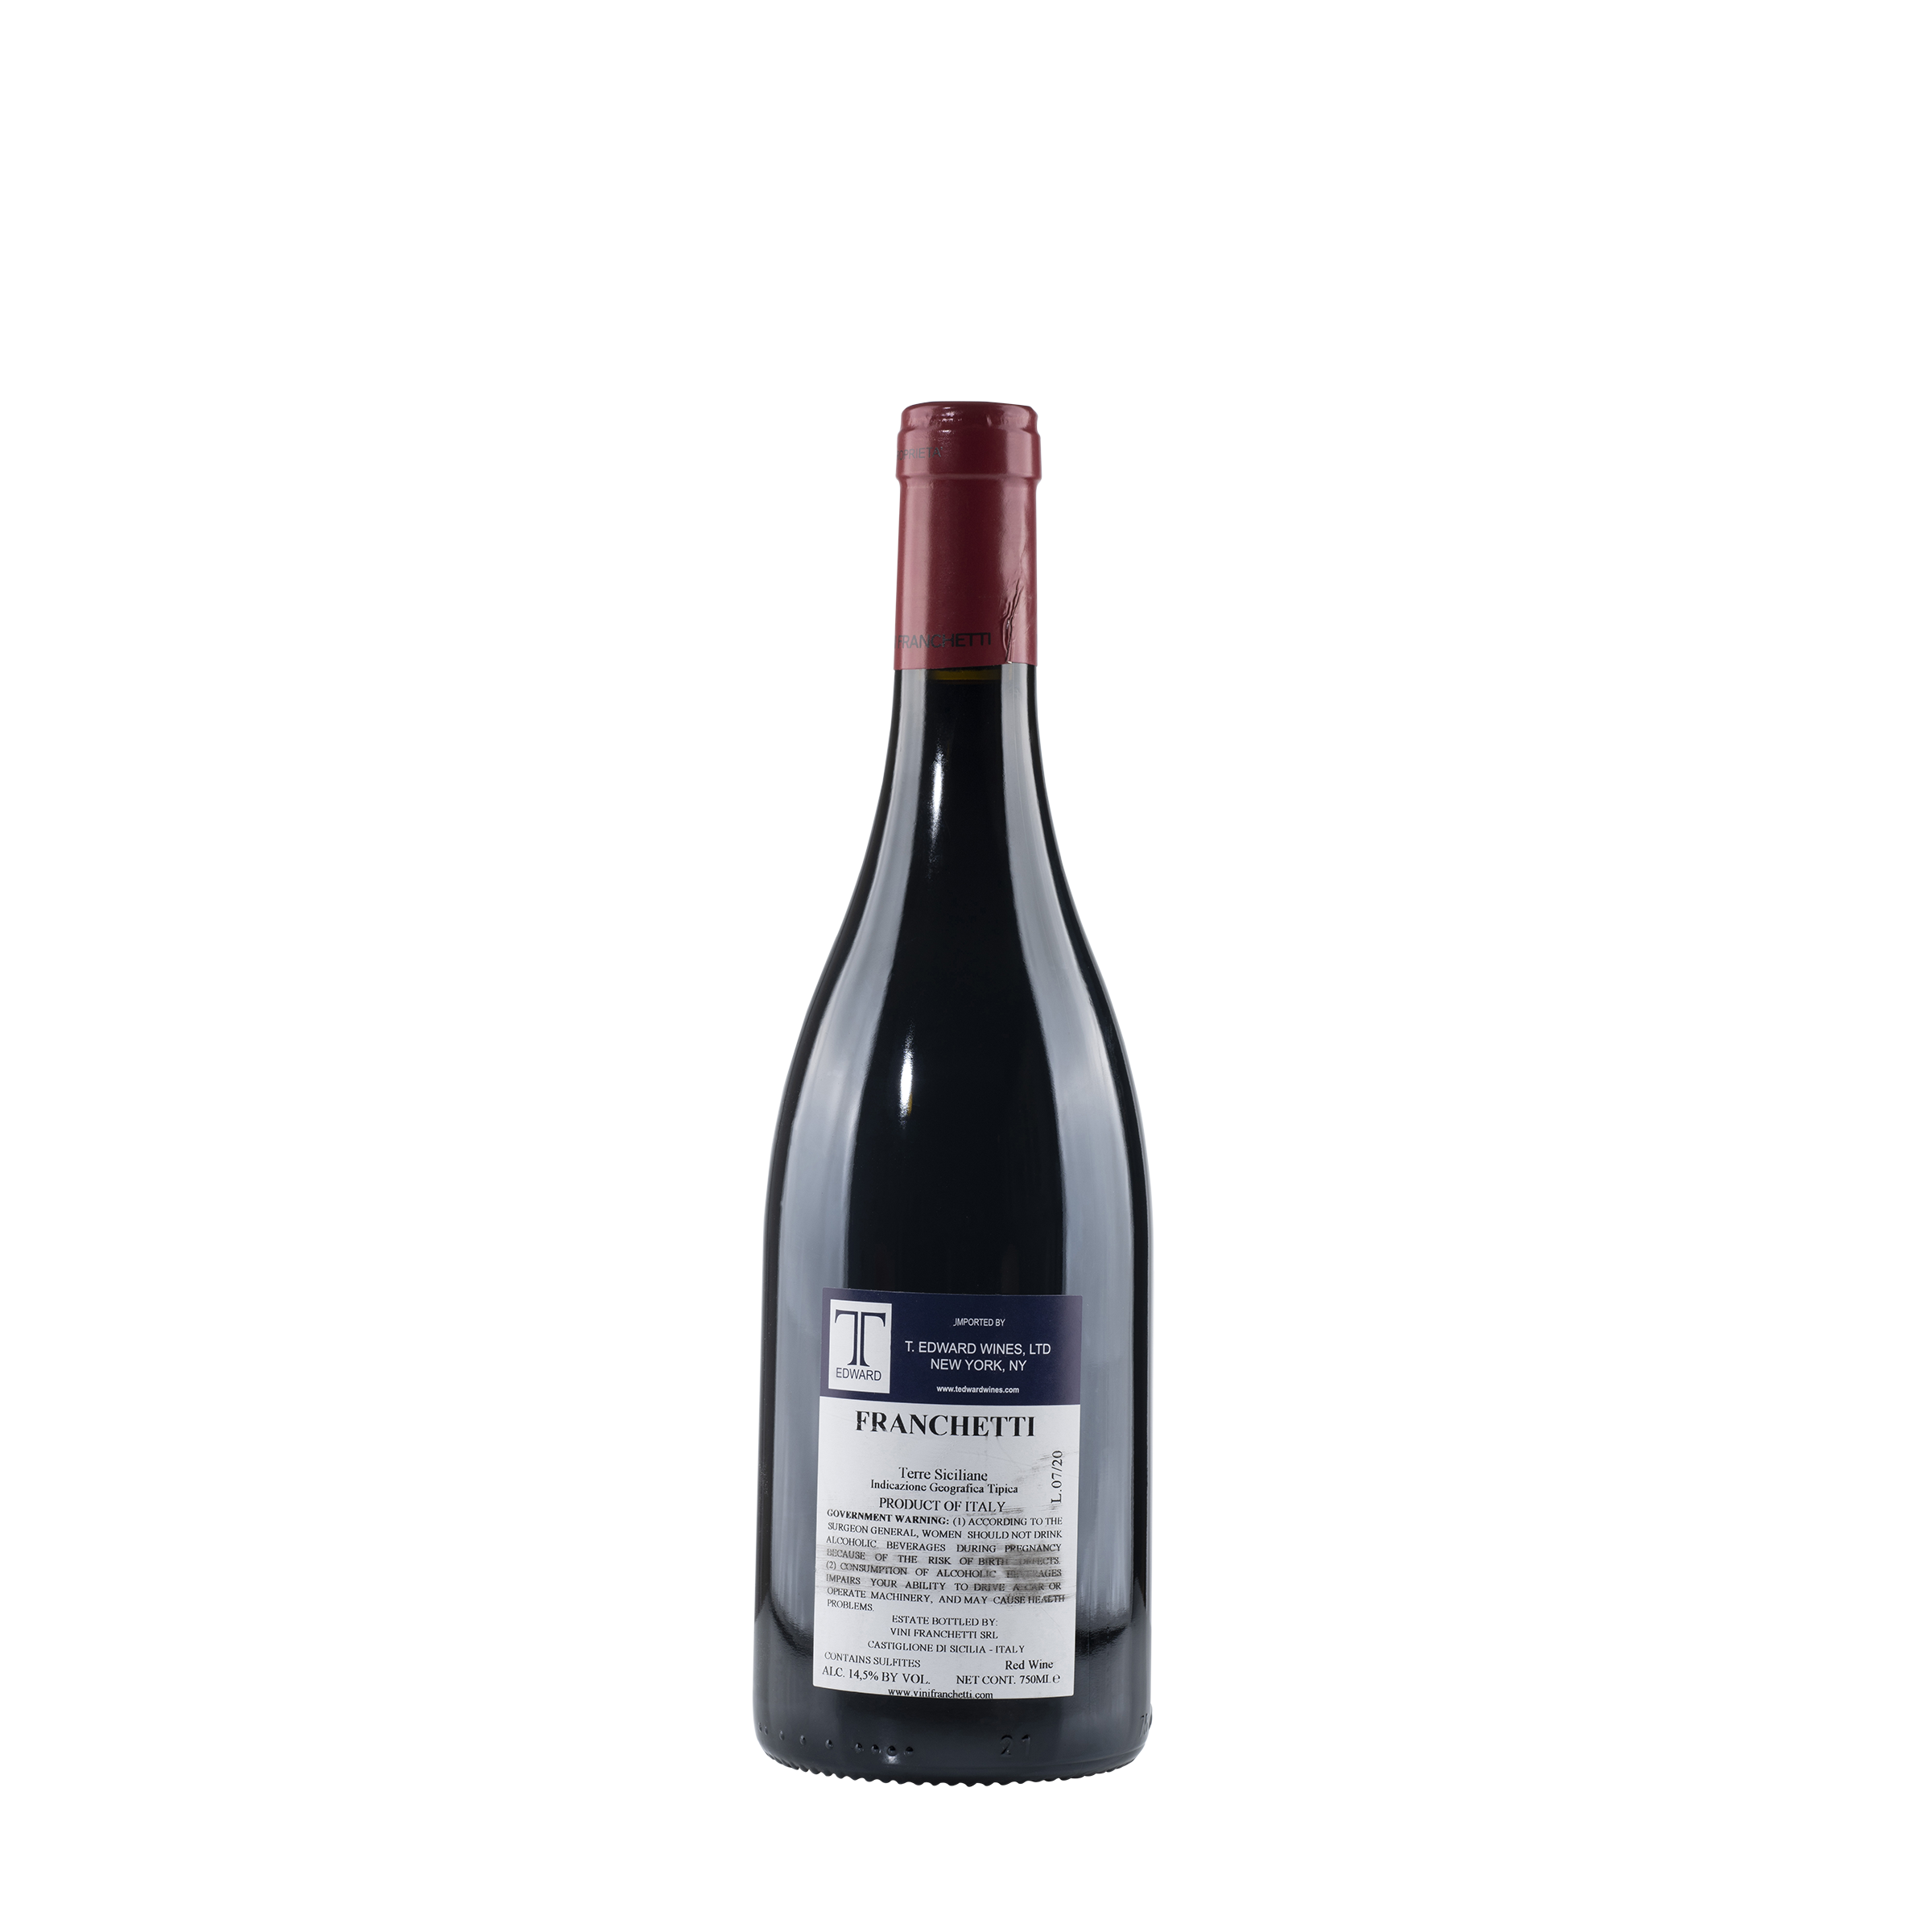 Franchetti "Terre Siciliane IGT" 2020 Bottle Back